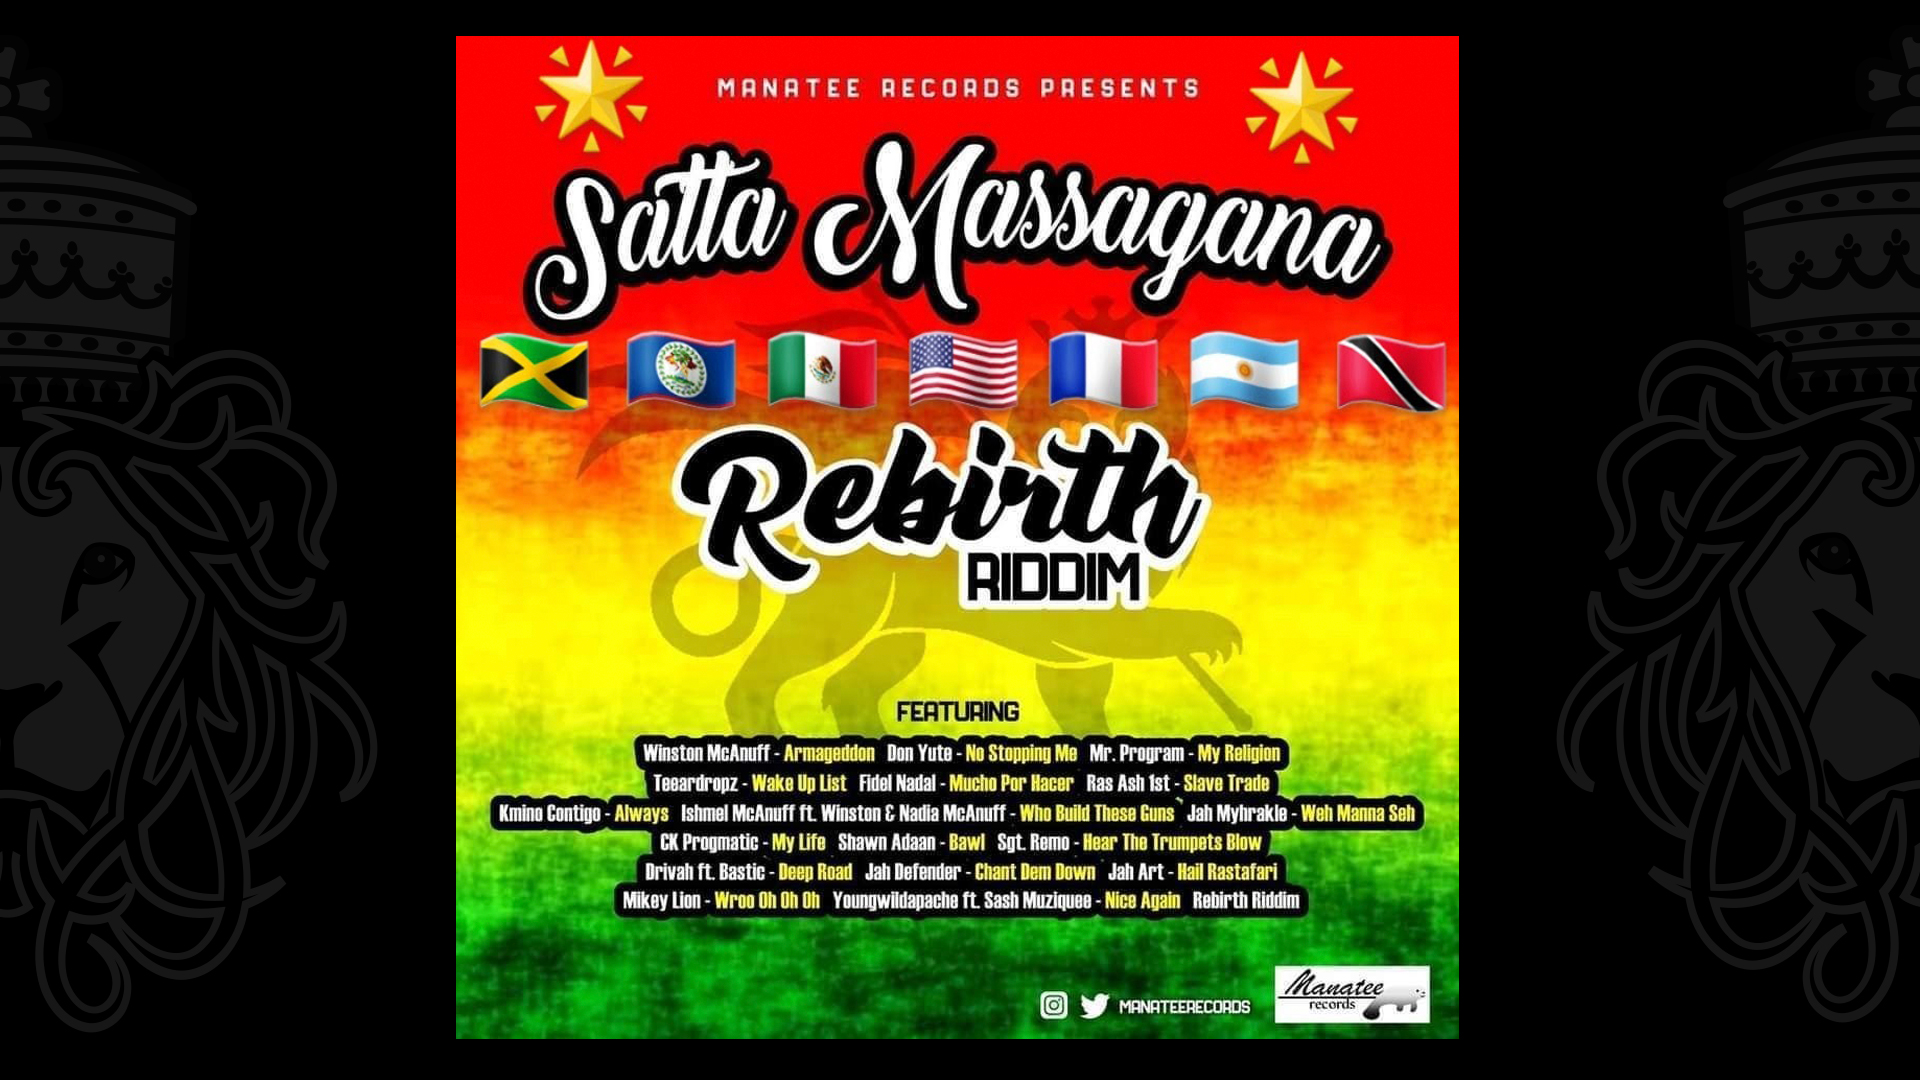 Manatee Records Satta Massagana Rebirth Riddim